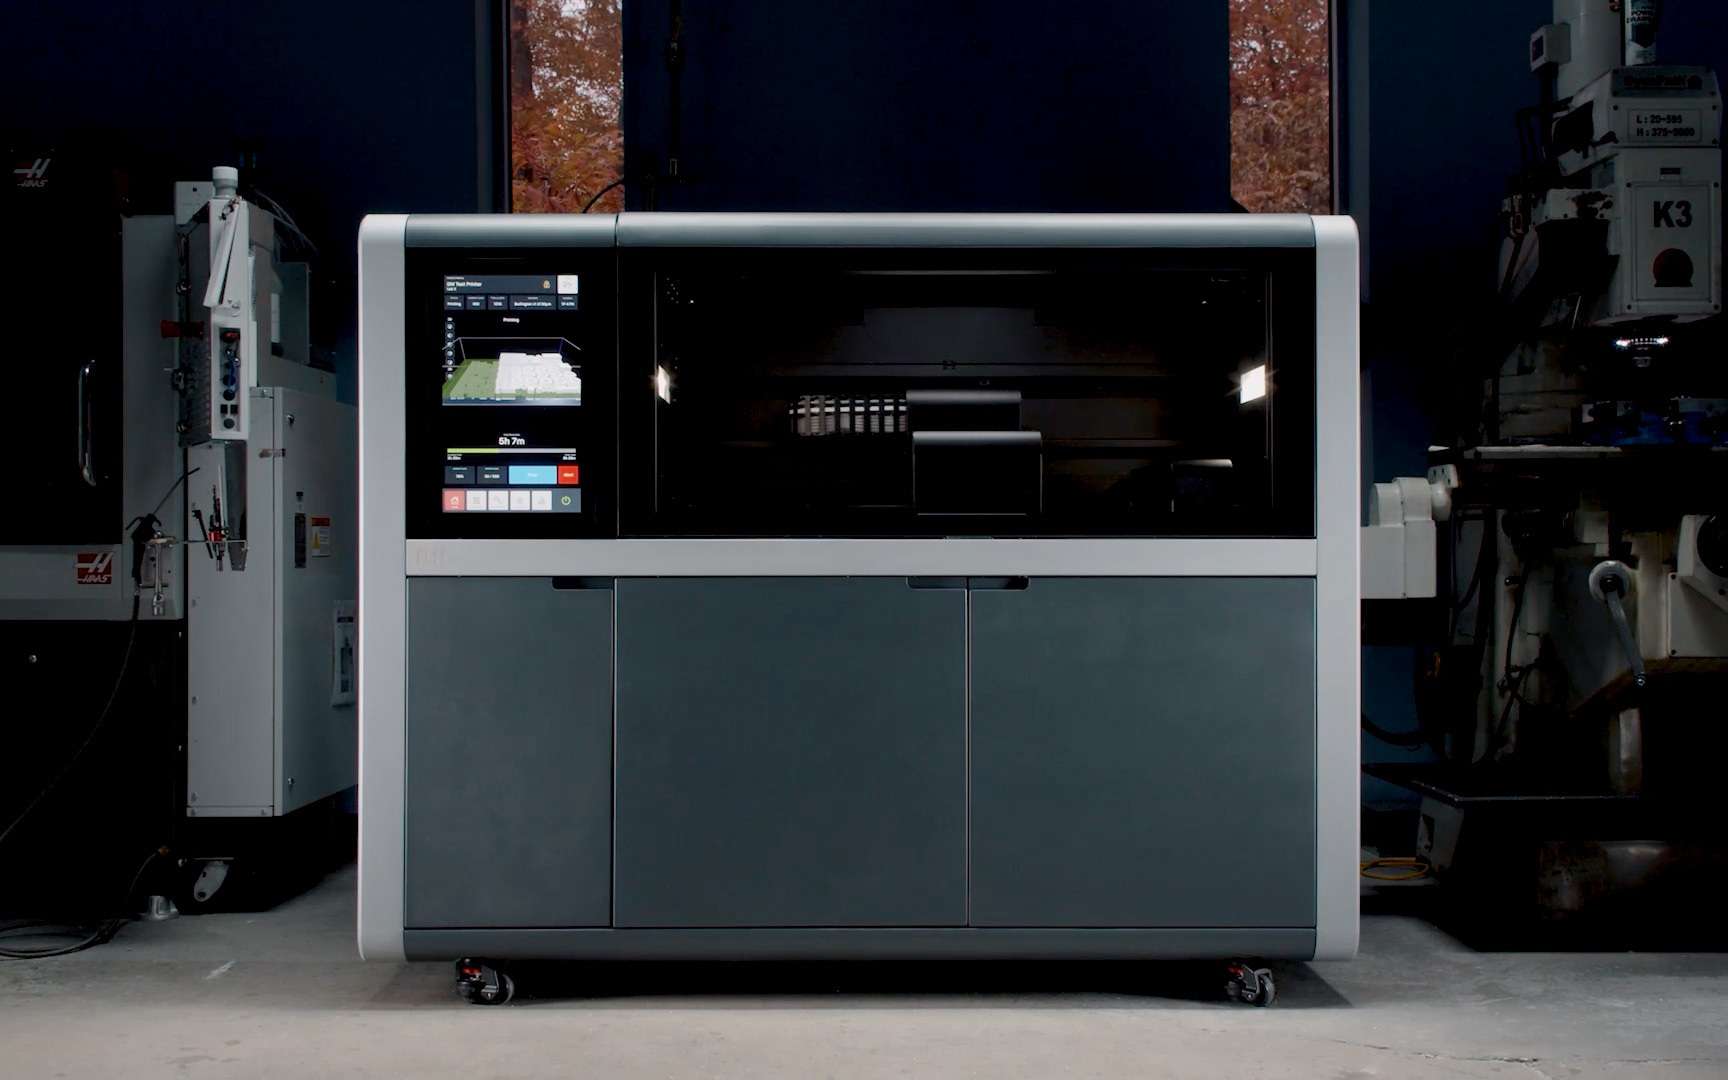 Mini DIY Desktop Laser Engraving Machine for Paper,Wood – CECLE Machine